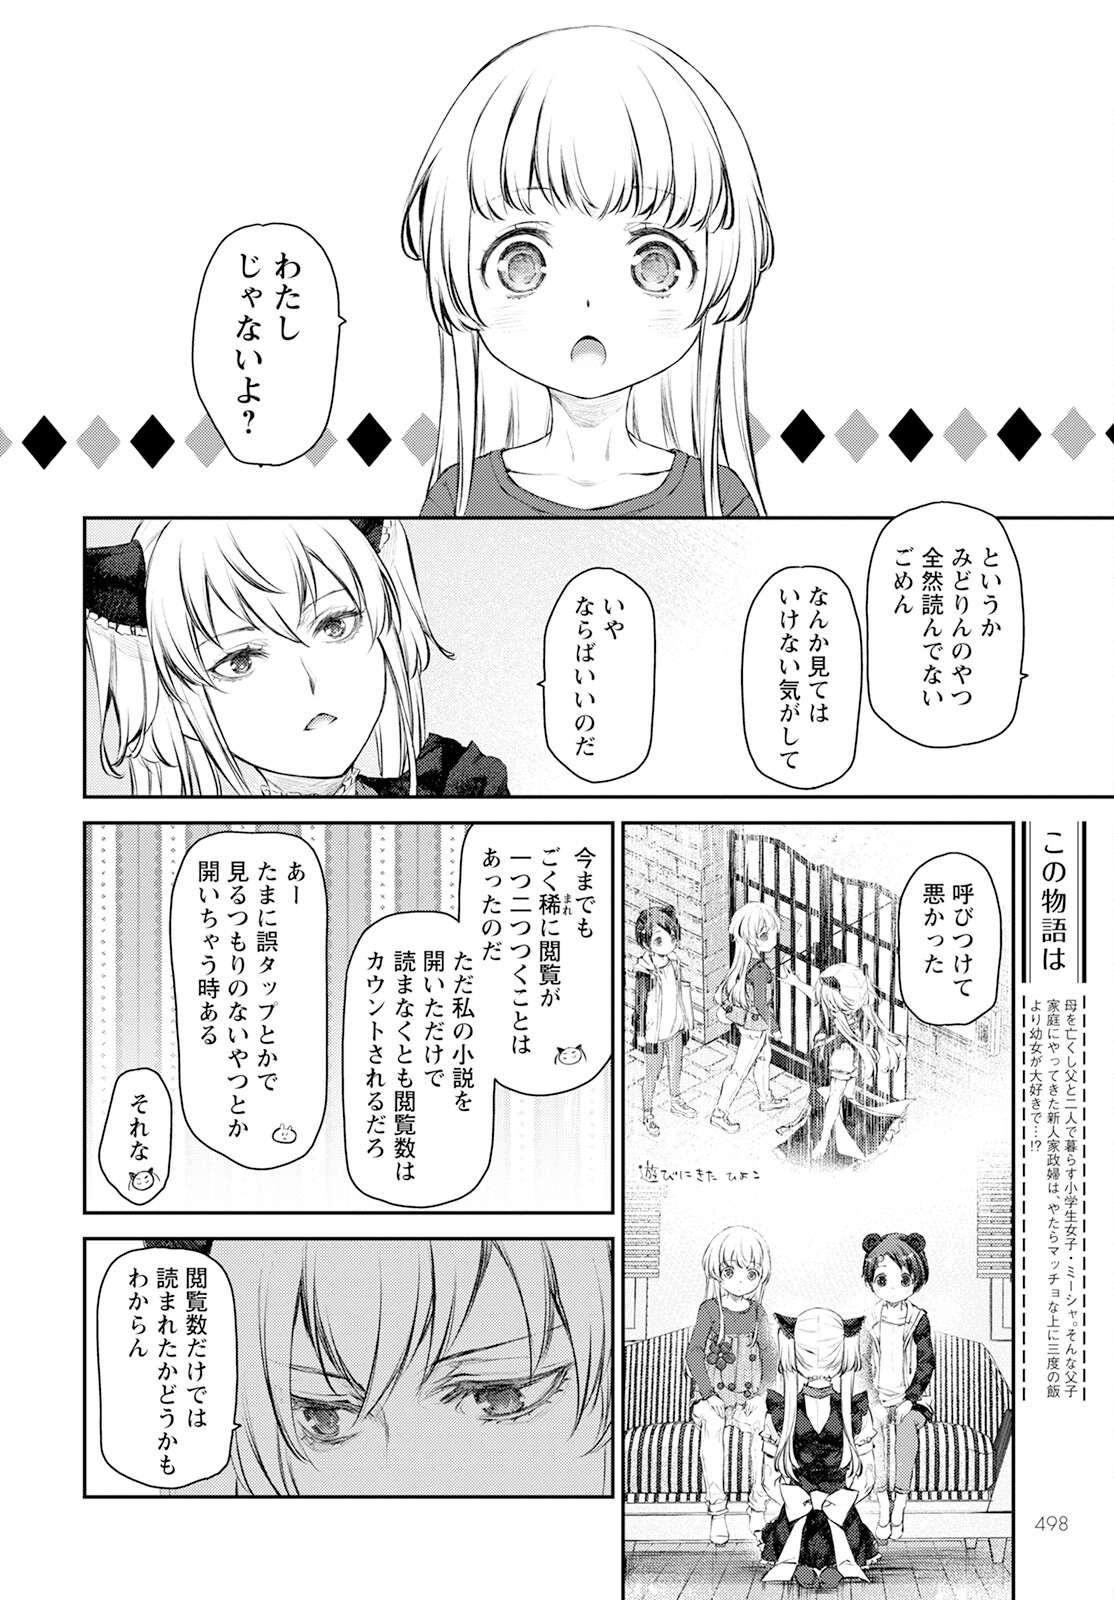 Uchi no Maid ga Uzasugiru! - Chapter 56 - Page 2